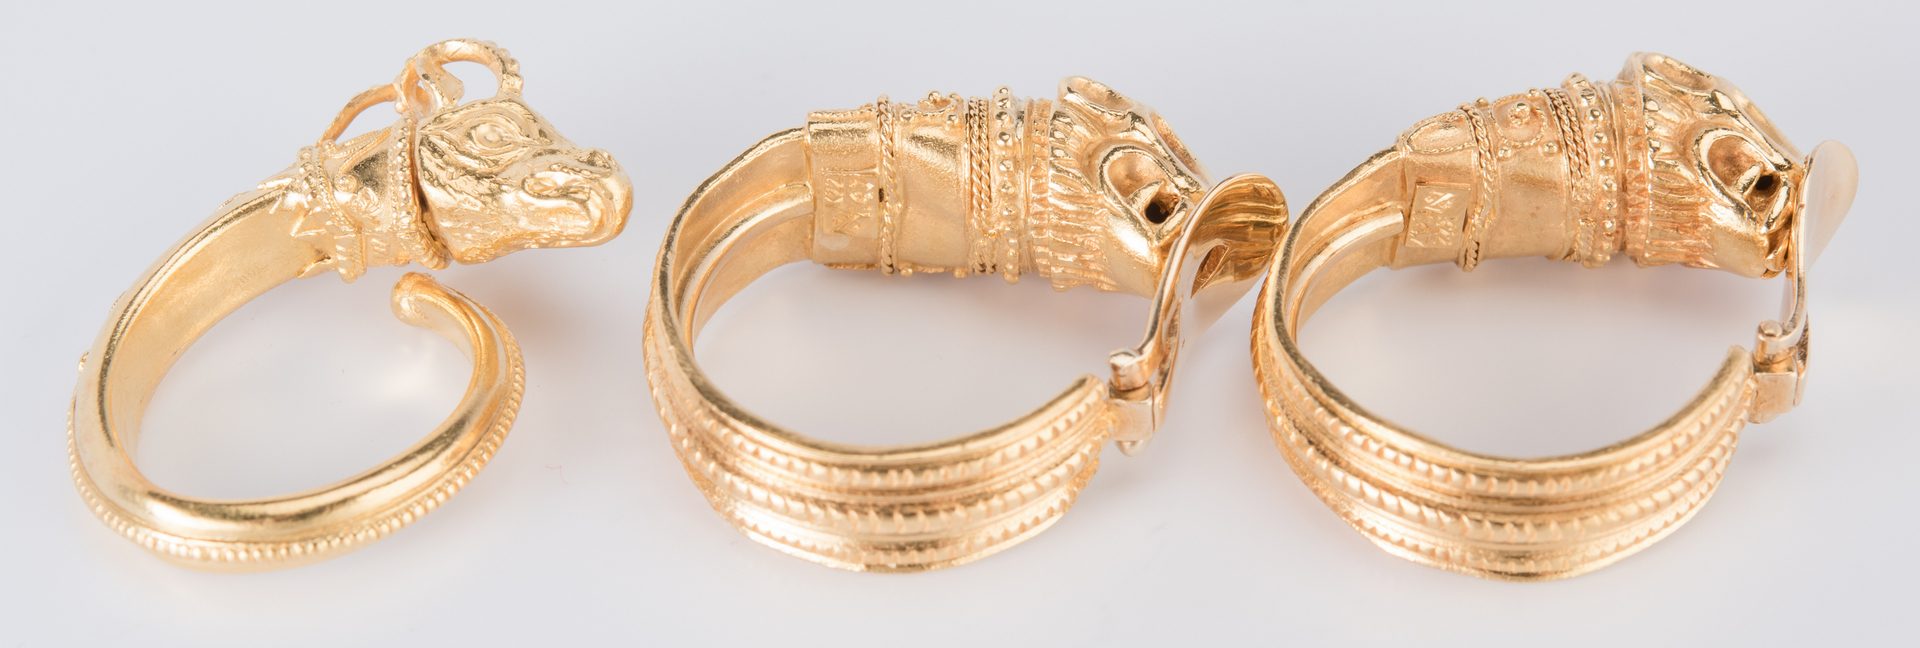 Lot 47: Set 22K Etruscan style Jewelry